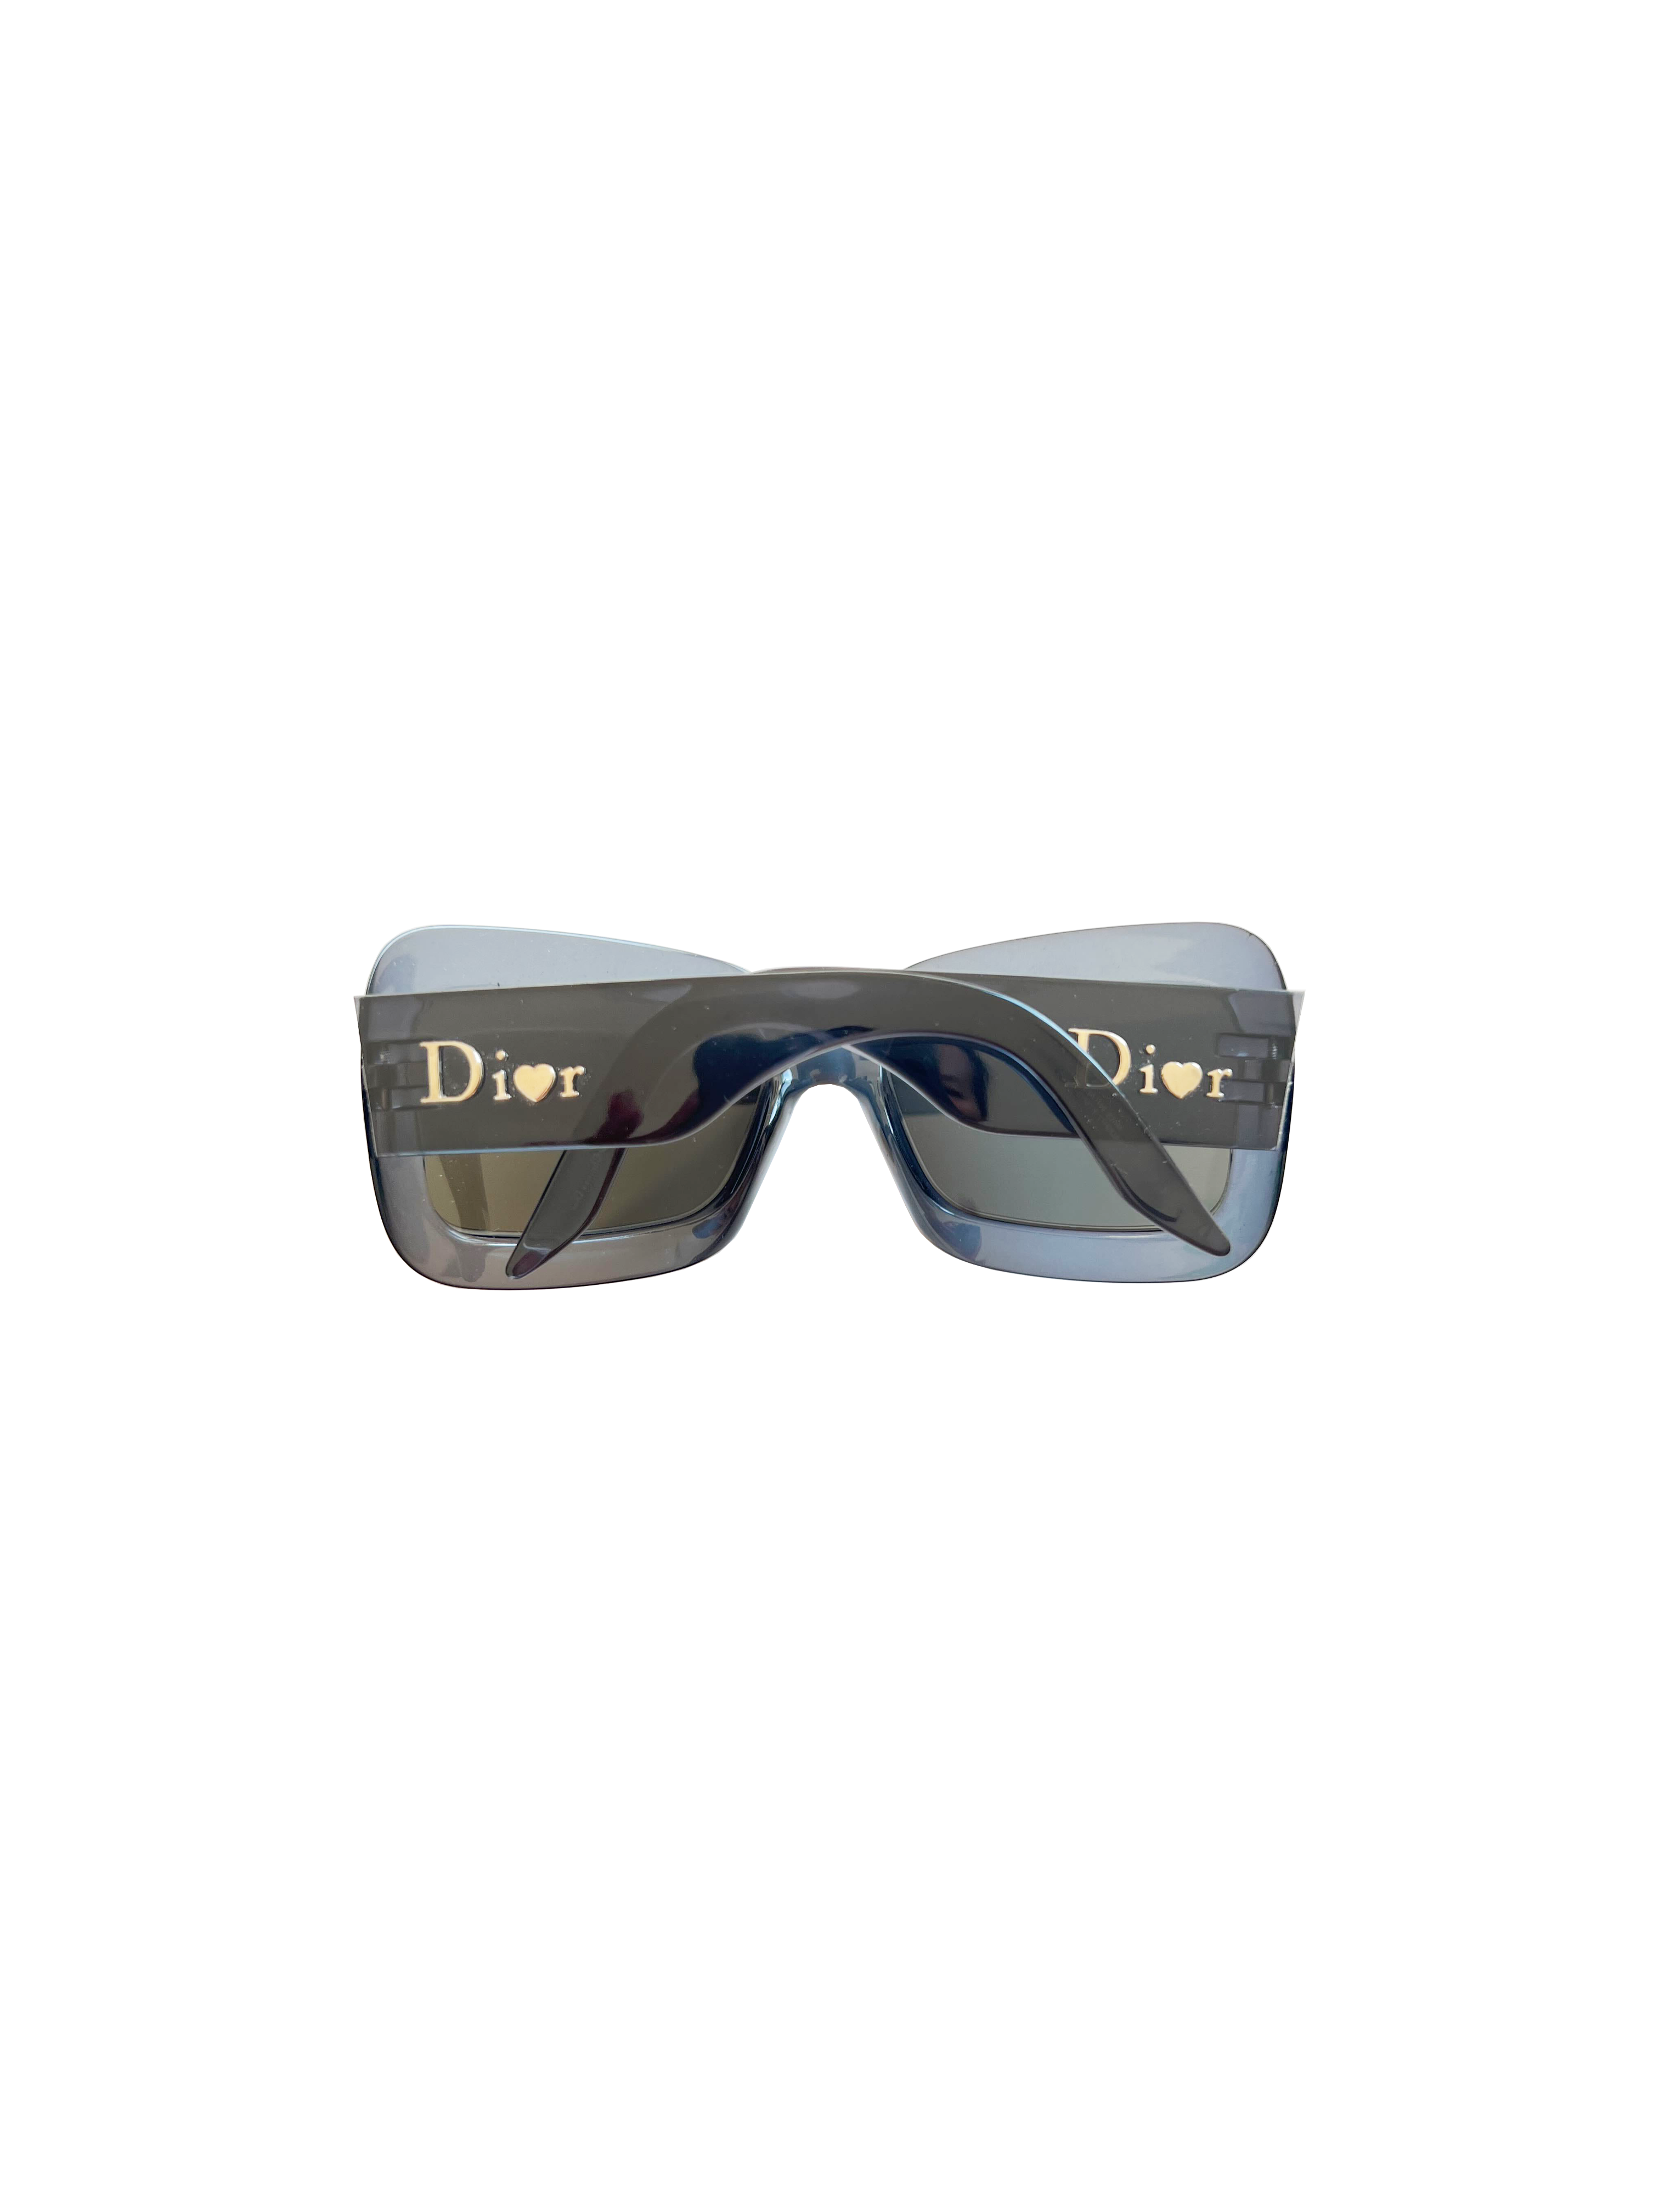 Christian Dior 2000s Acetate Blue Square Sunglasses